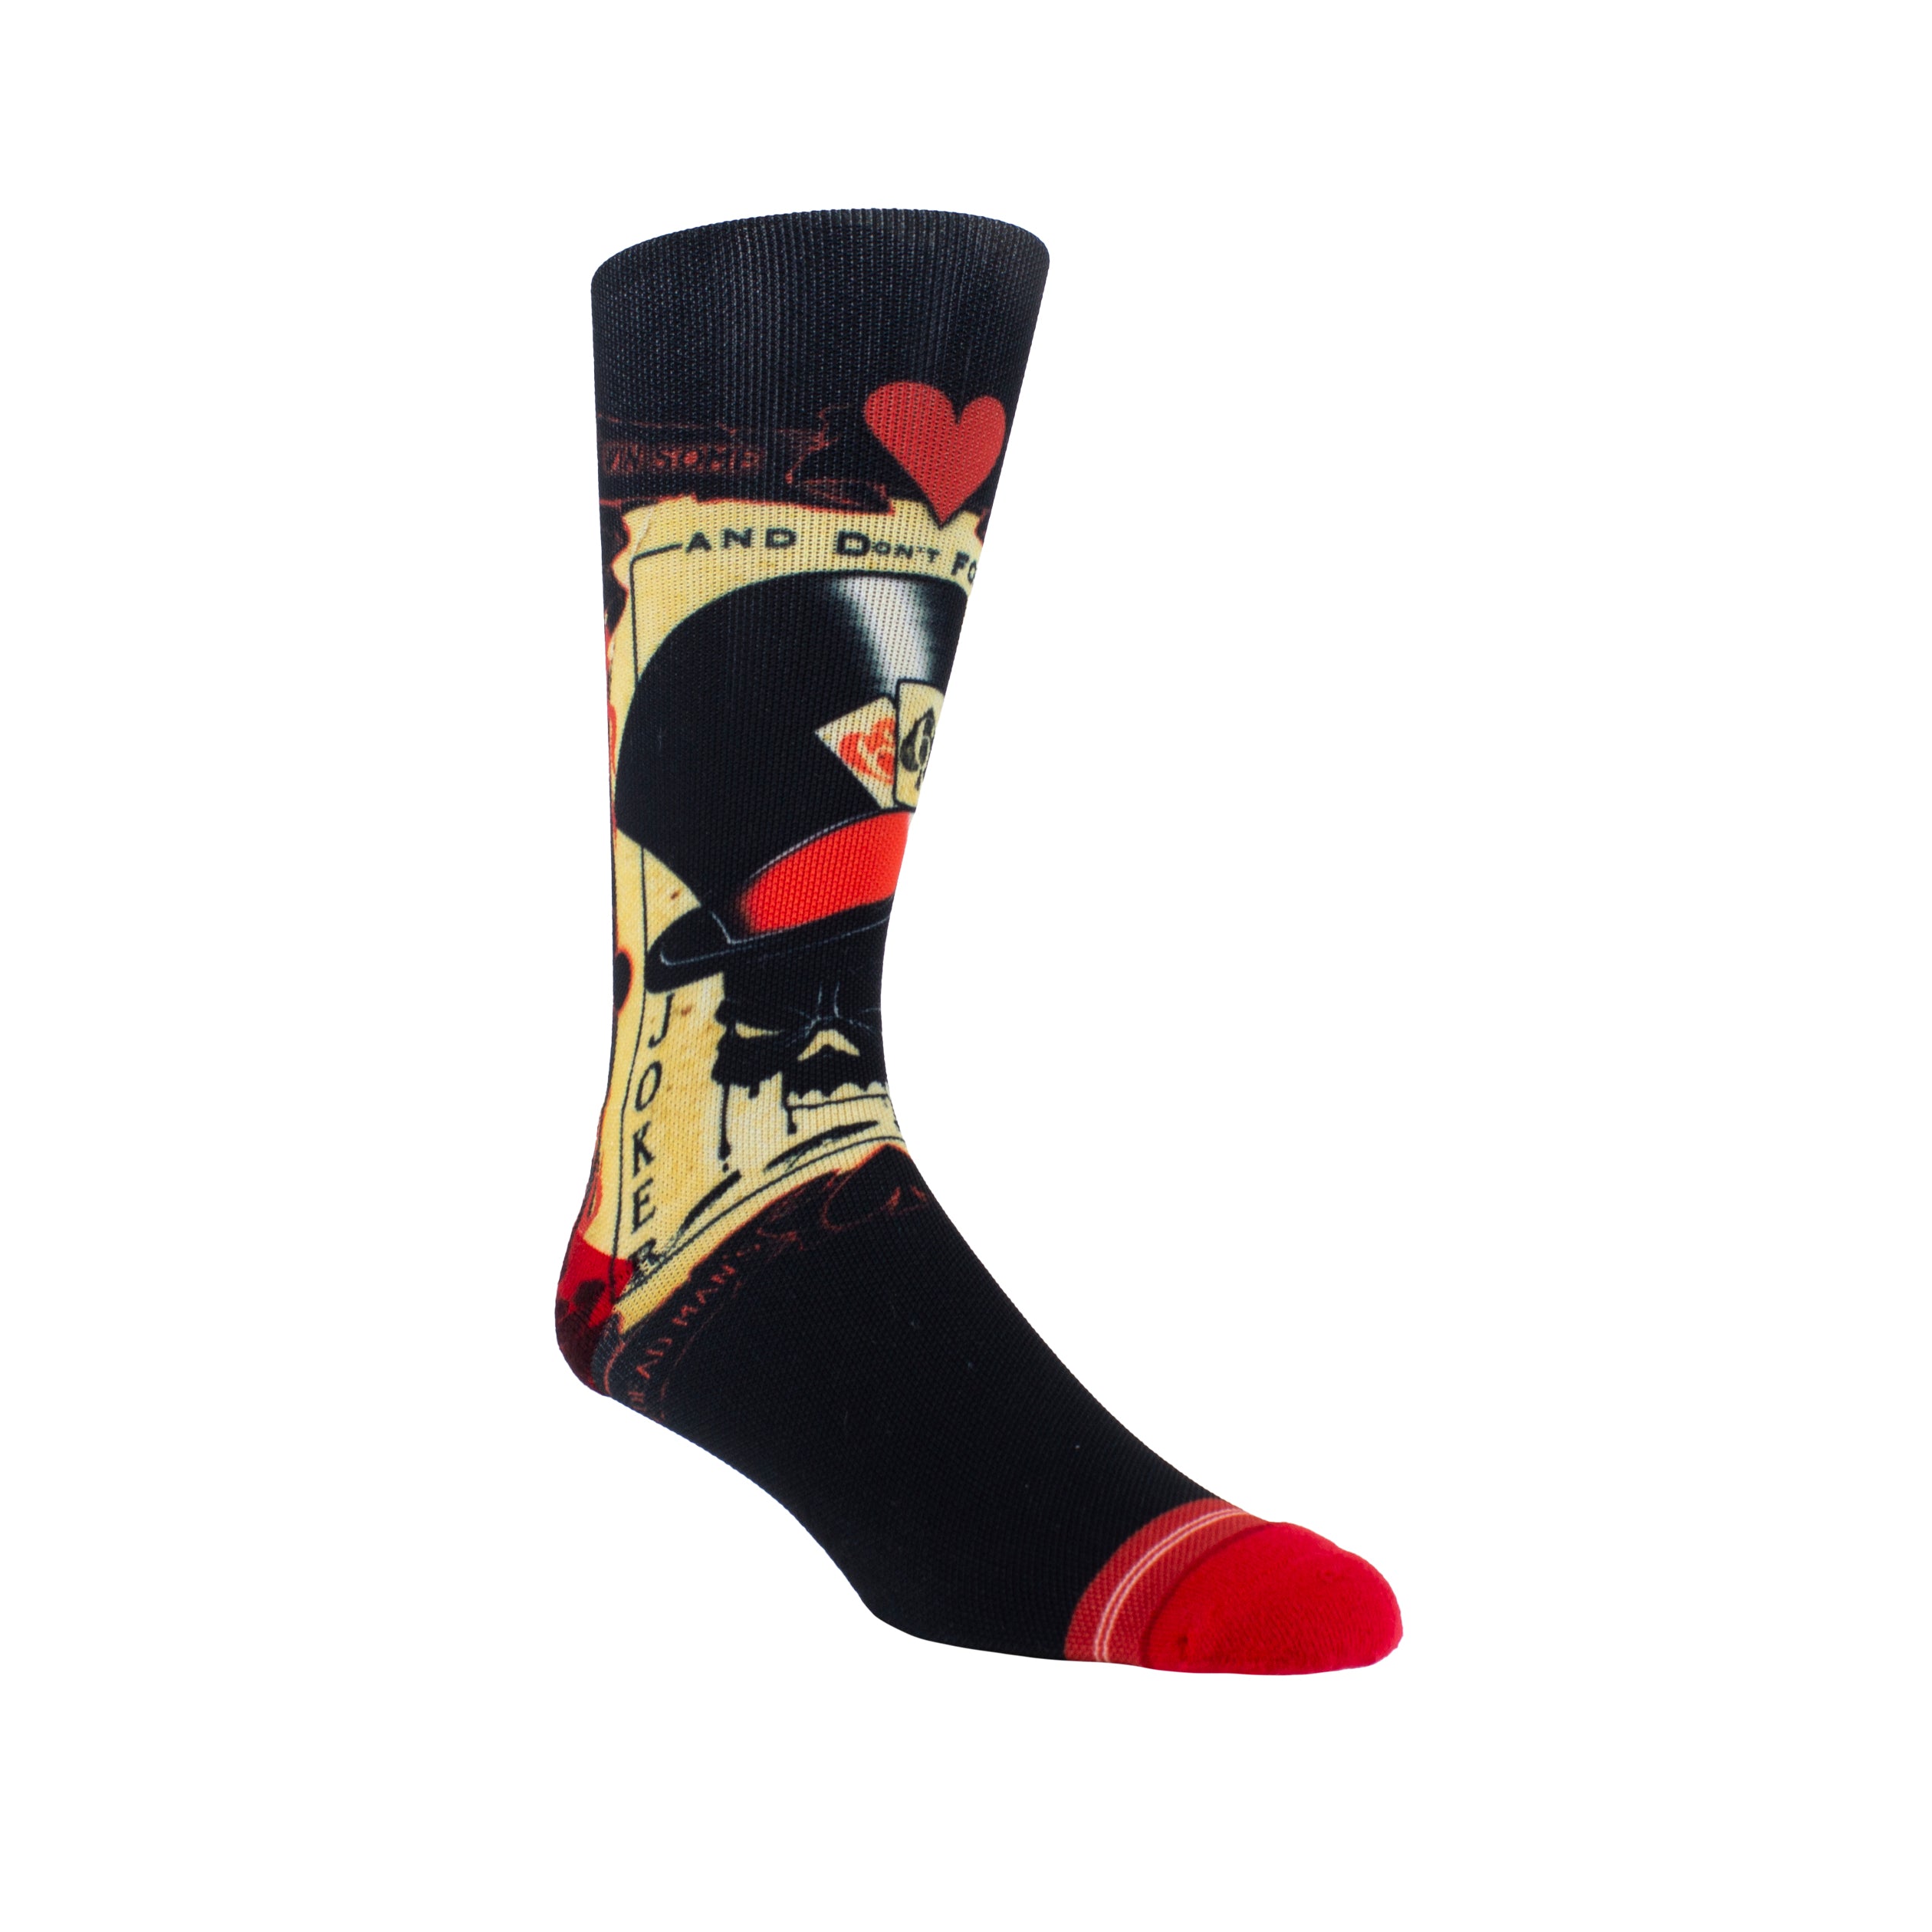 ALCHEMY The Joker Socks, 1 PAIR – Perri's Socks